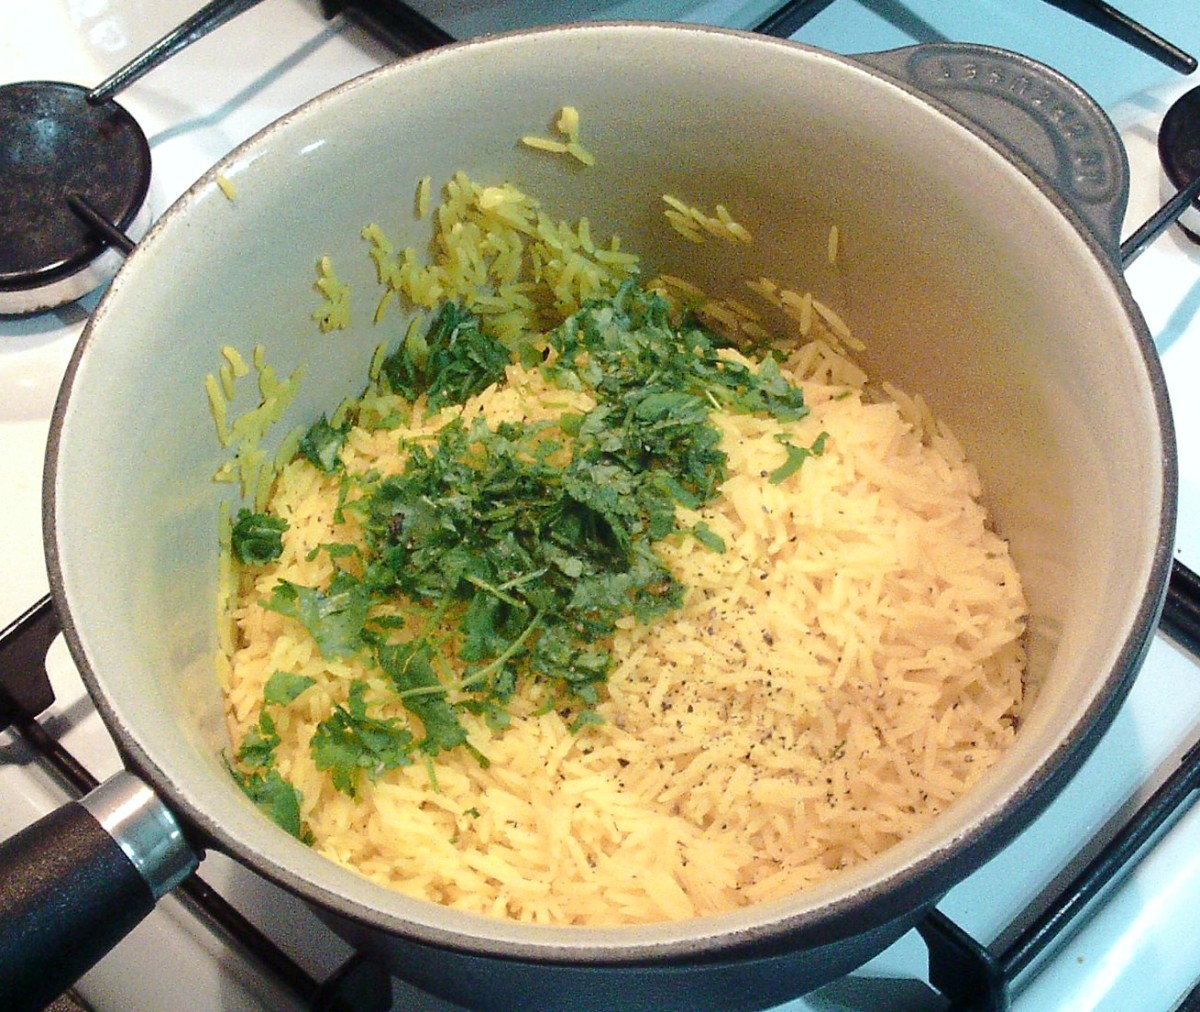 Coriander is added to turmeric rice